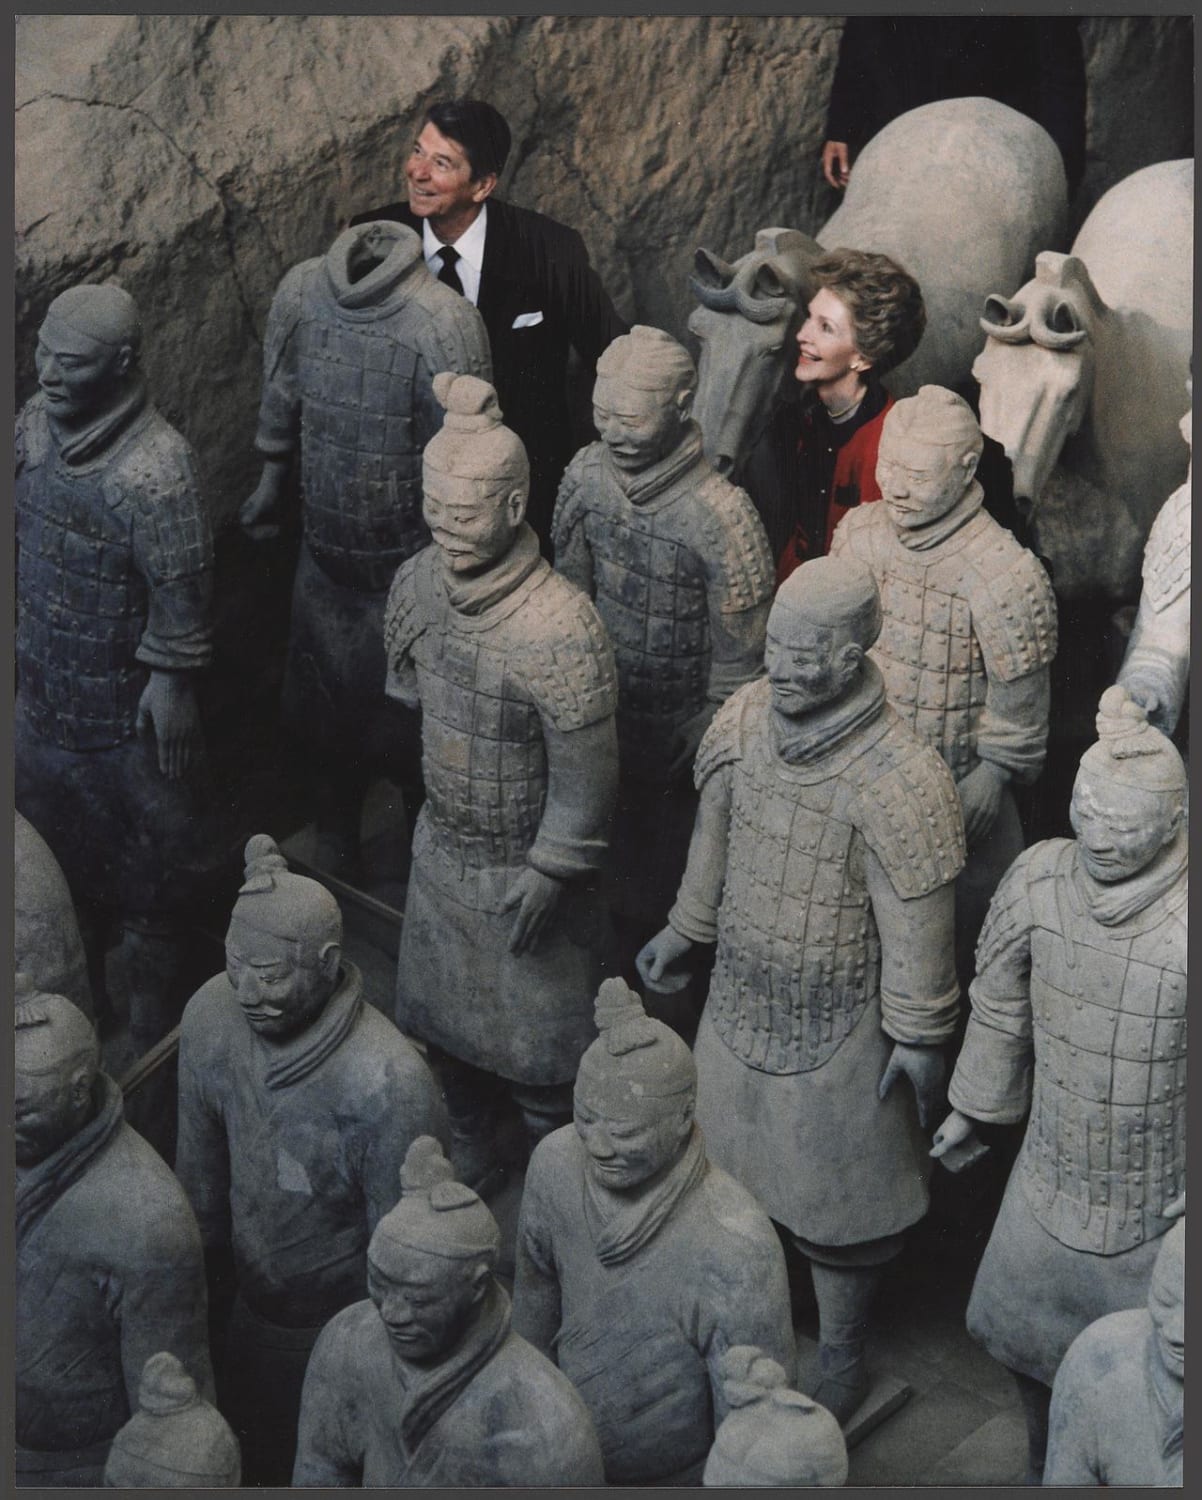 Nancy and Ronald Reagan amidst the terracotta warriors, China 1984